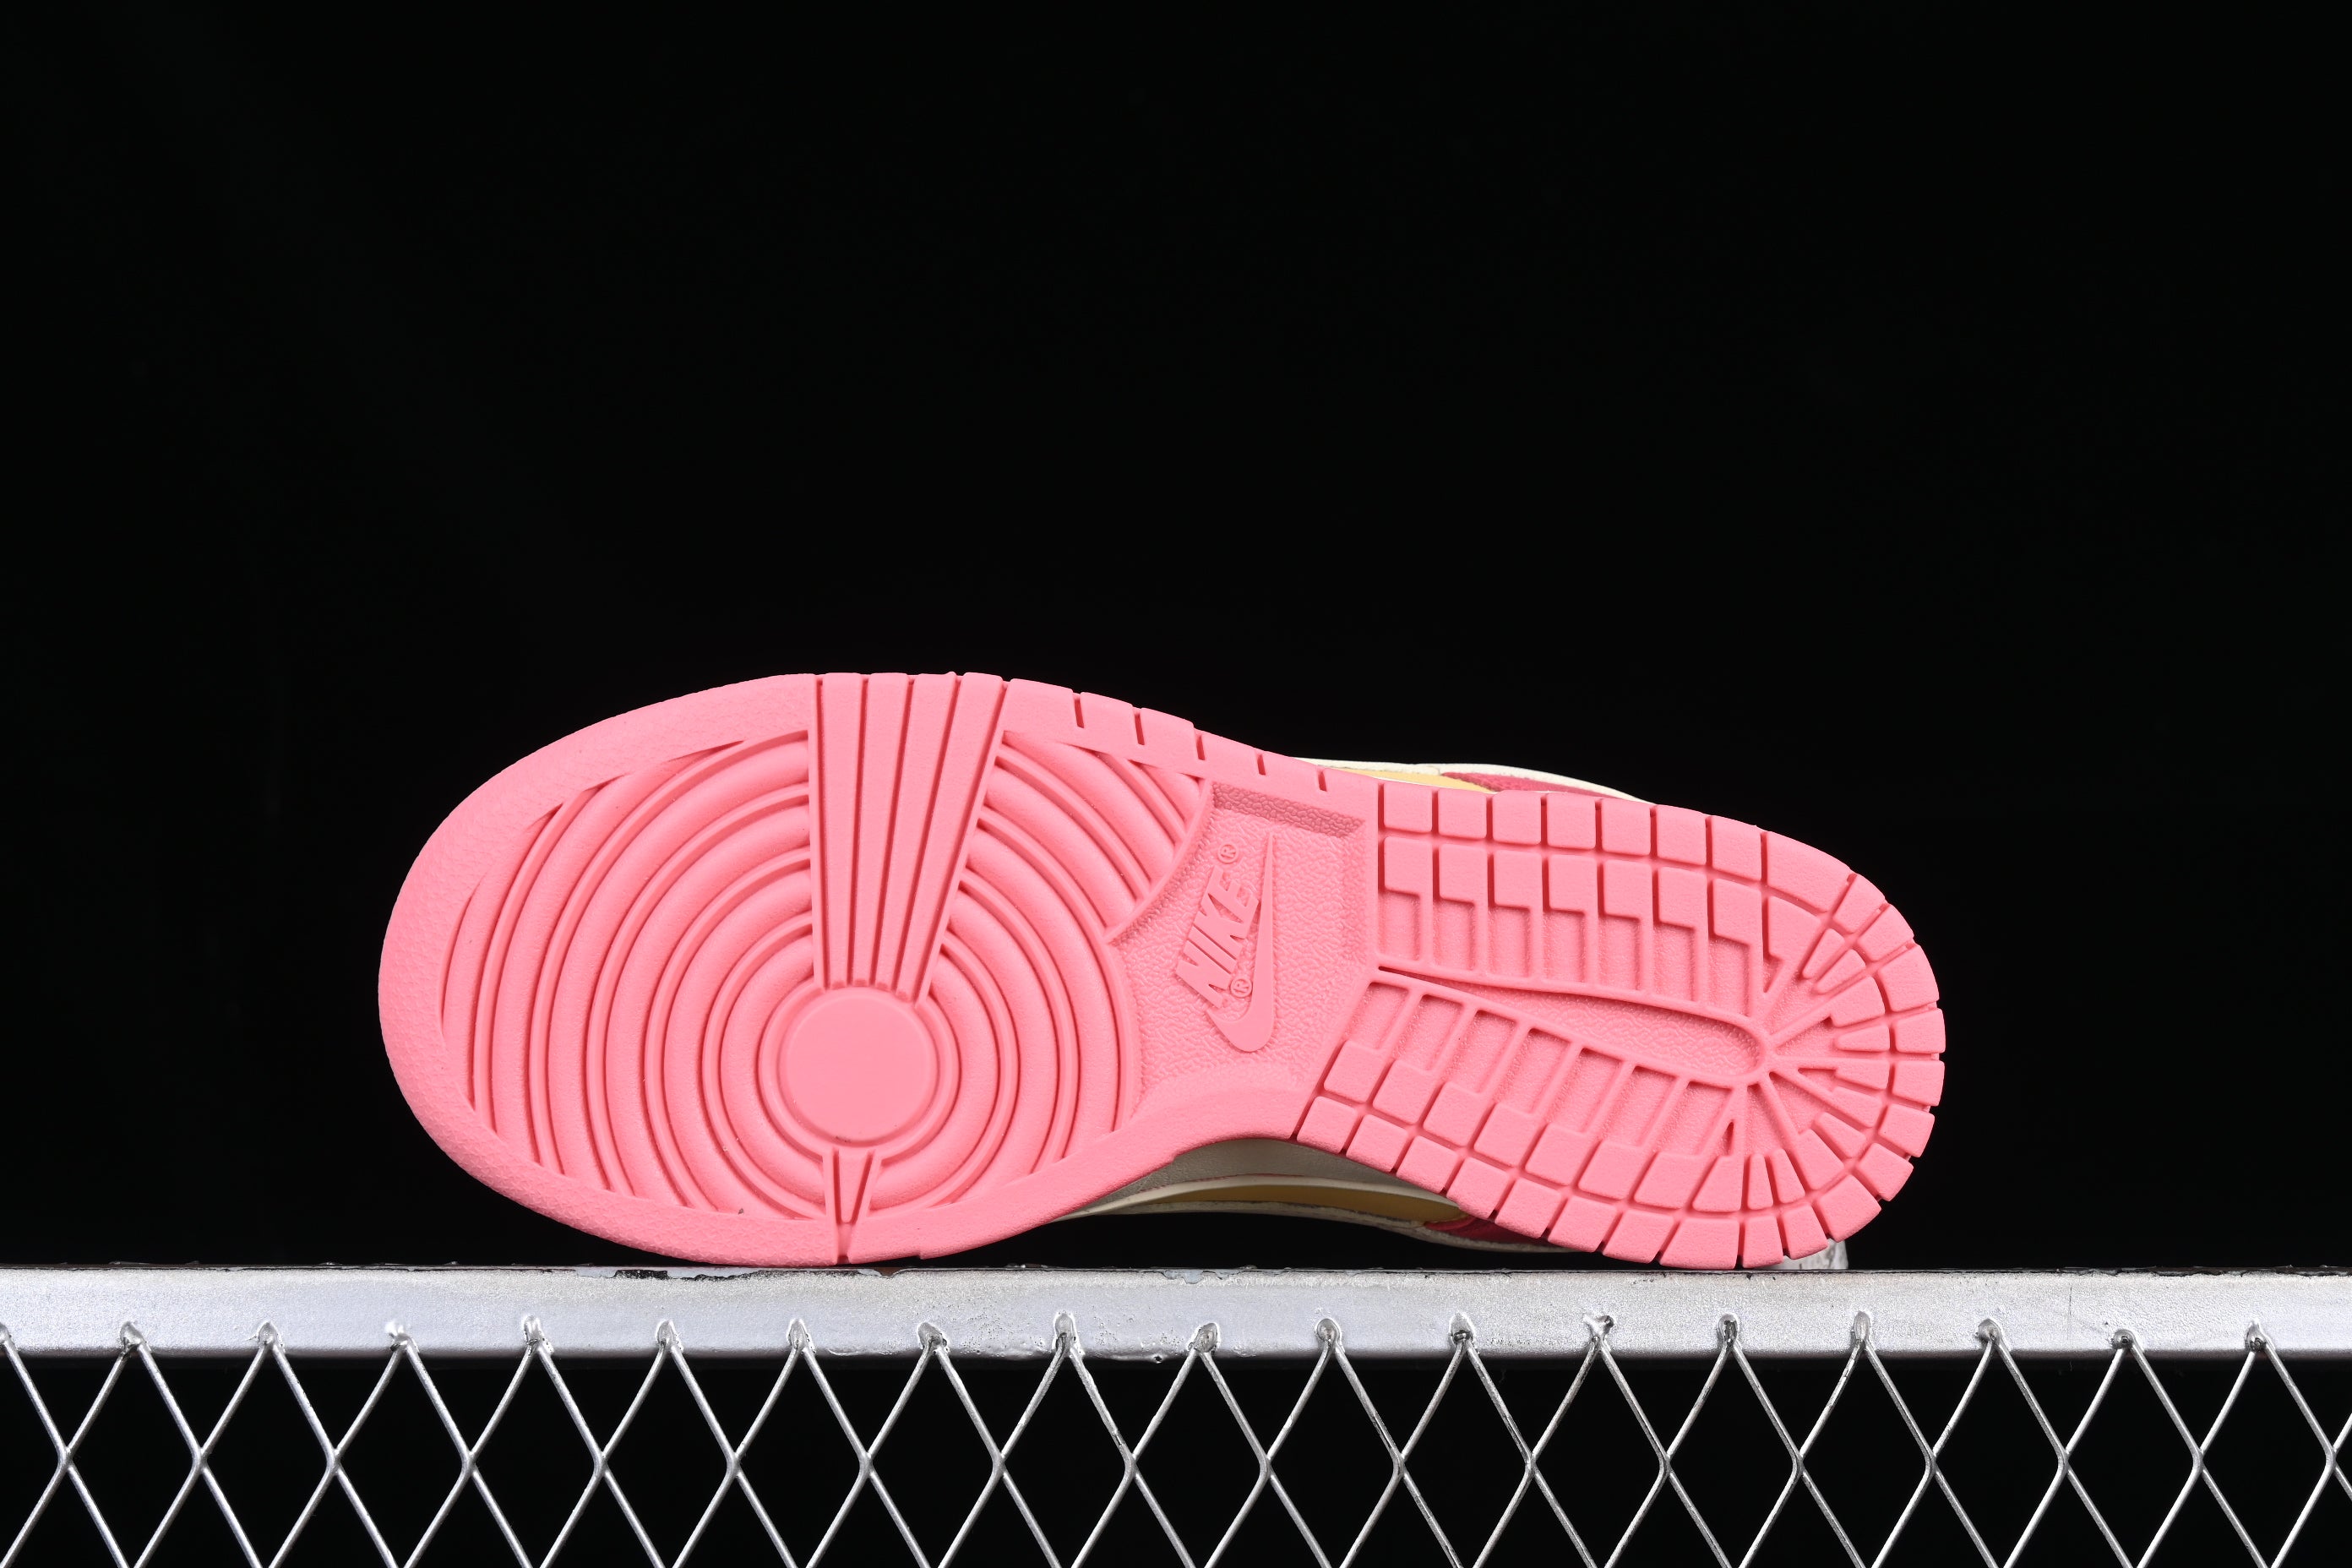 NikeWMNS Dunk Low Strawberry - Peach/Cream